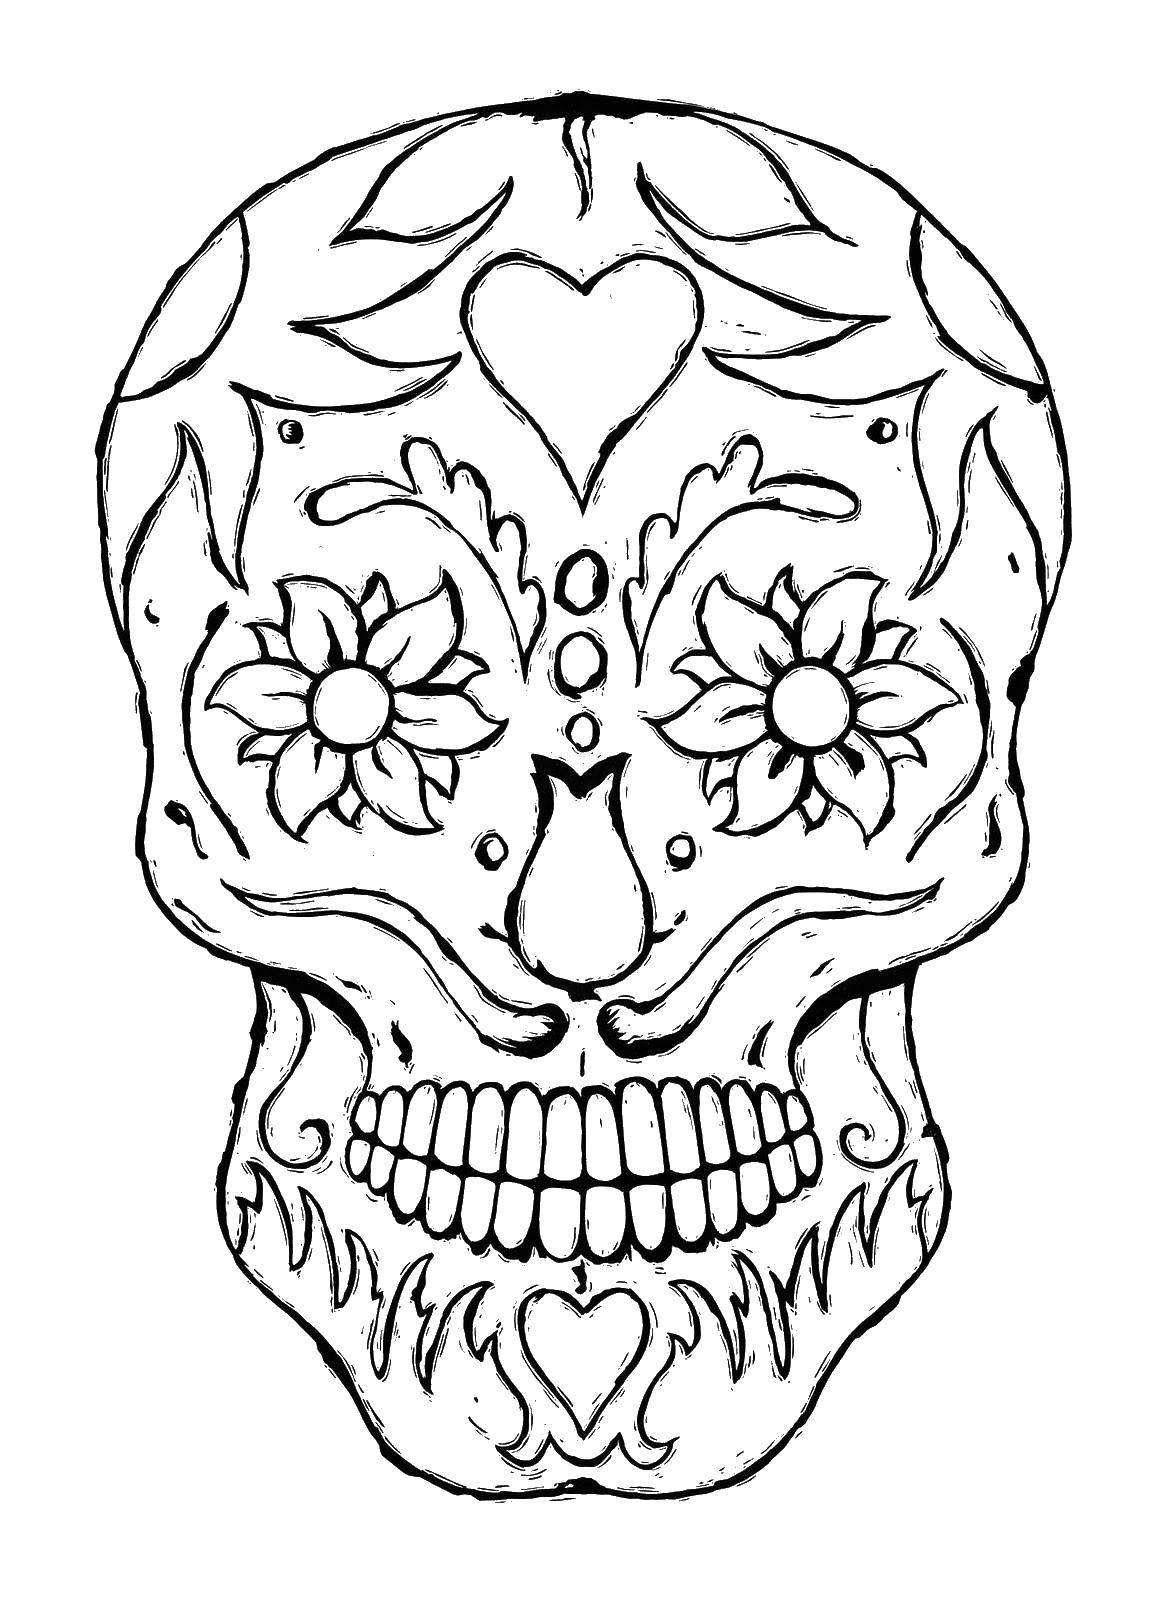 Coloring Skull with flower eyes. Category Skull. Tags:  Skull, patterns.